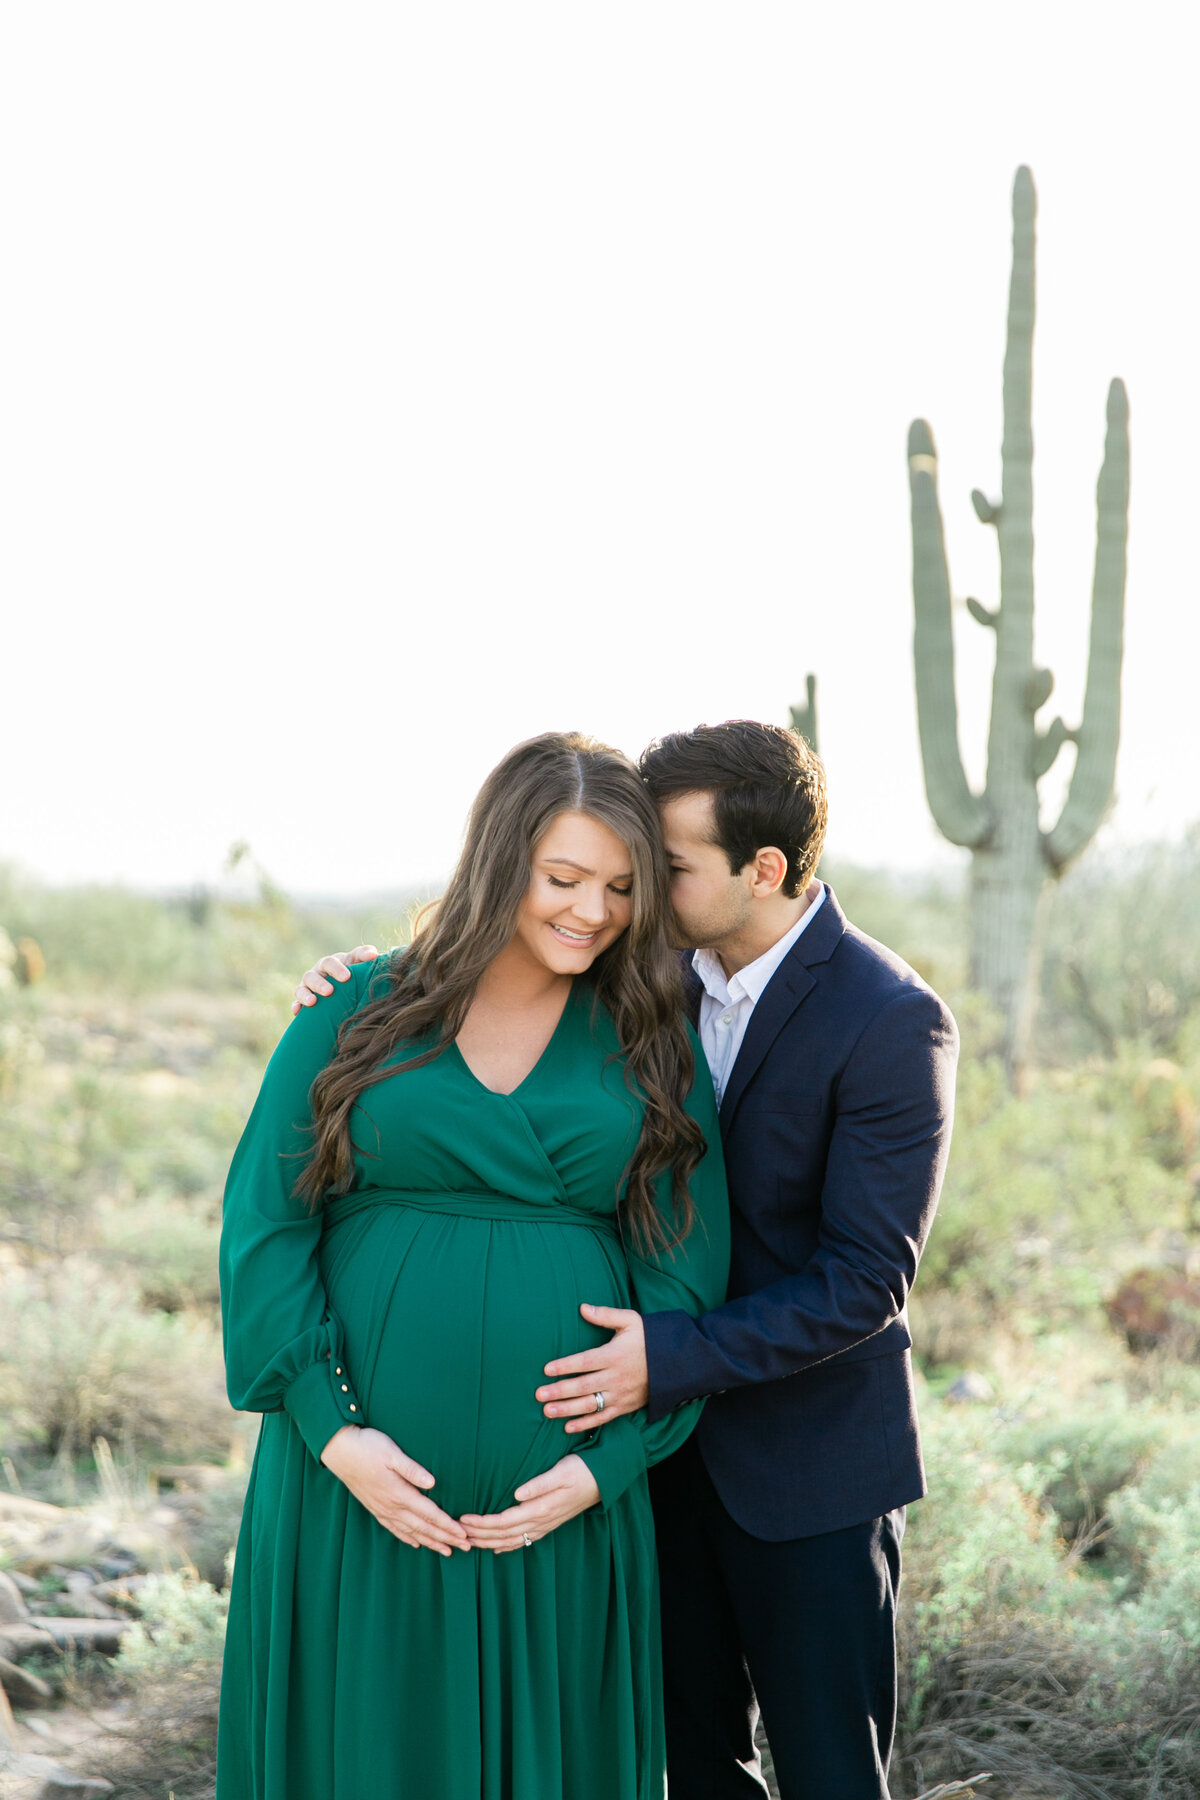 Karlie Colleen Photography - Scottsdale Arizona - Maternity Photos - Shelby & Cris-20